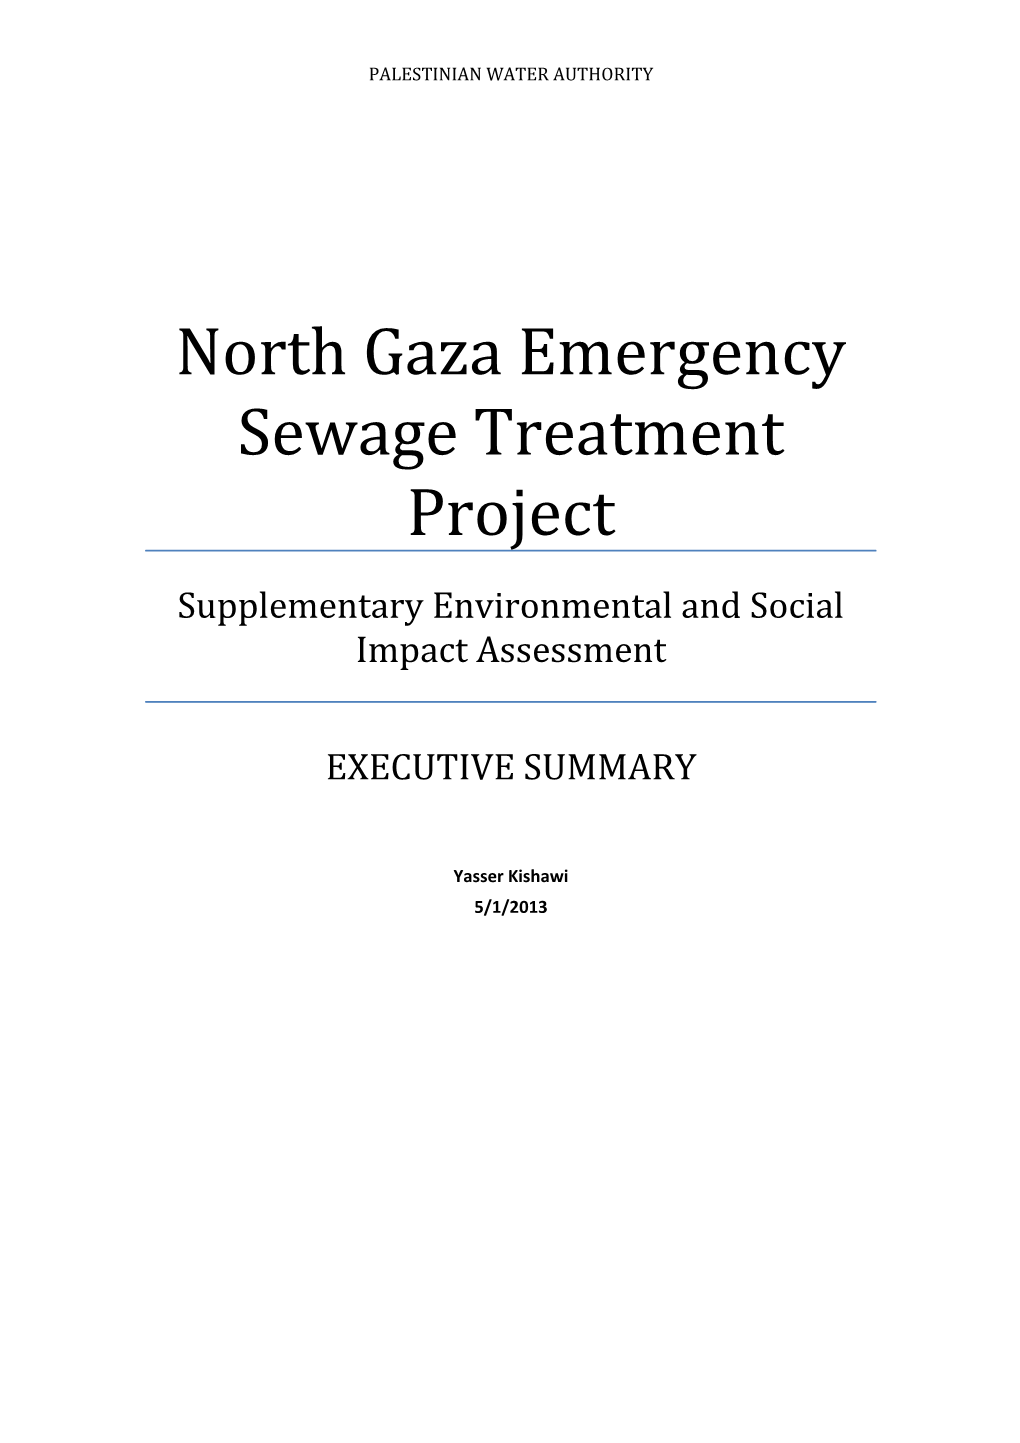 North Gaza Emergency Sewage Treatment Project